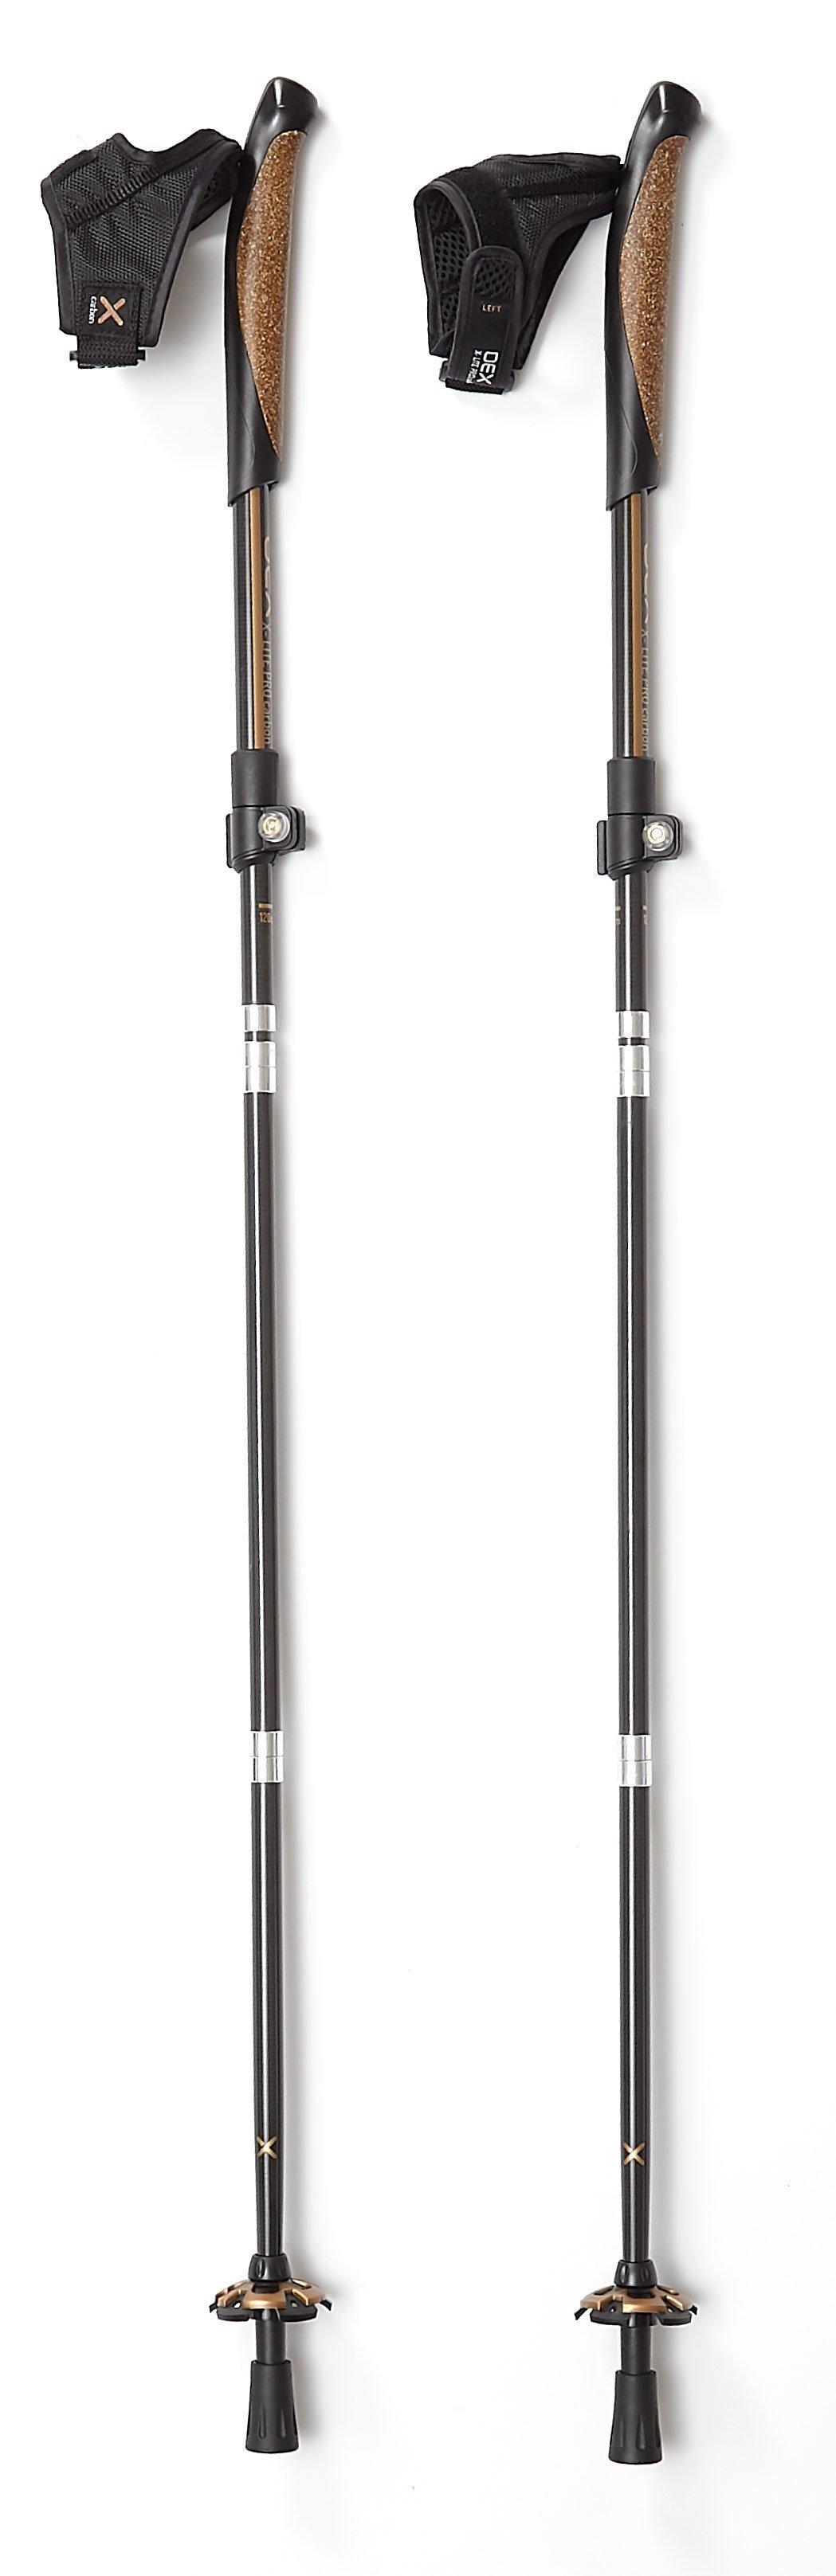  OEX X-Lite Pro Carbon Walking Poles (Pair)